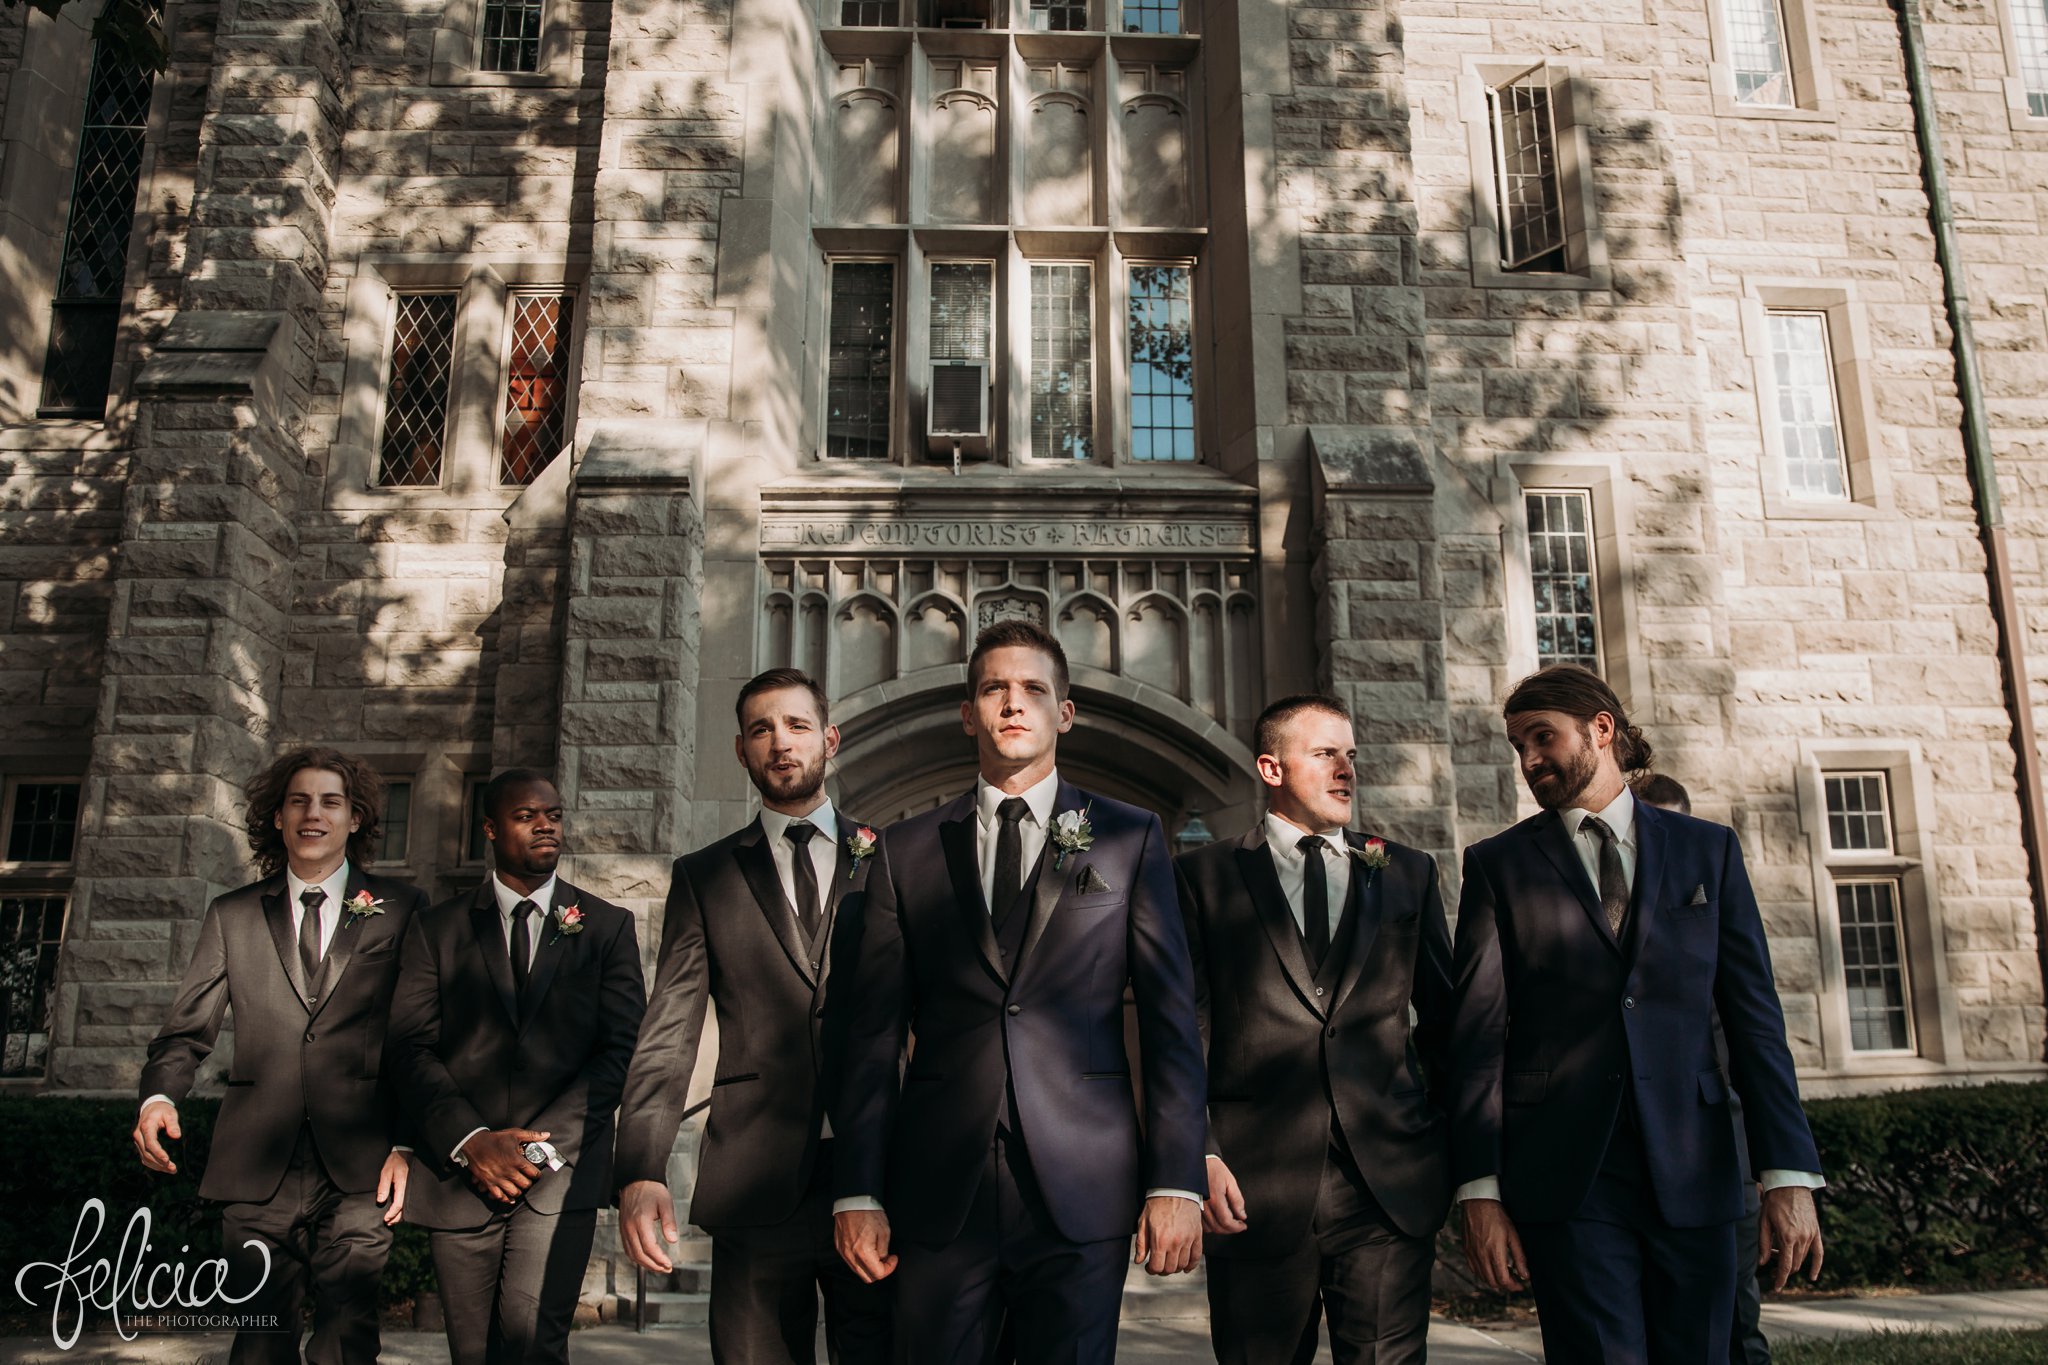 images by feliciathephotographer.com | wedding photographer | kansas city | redemptorist | classic | groomsmen | portrait | game face | navy and grey suits | dapple shadow | tip top tux | glamorous | 